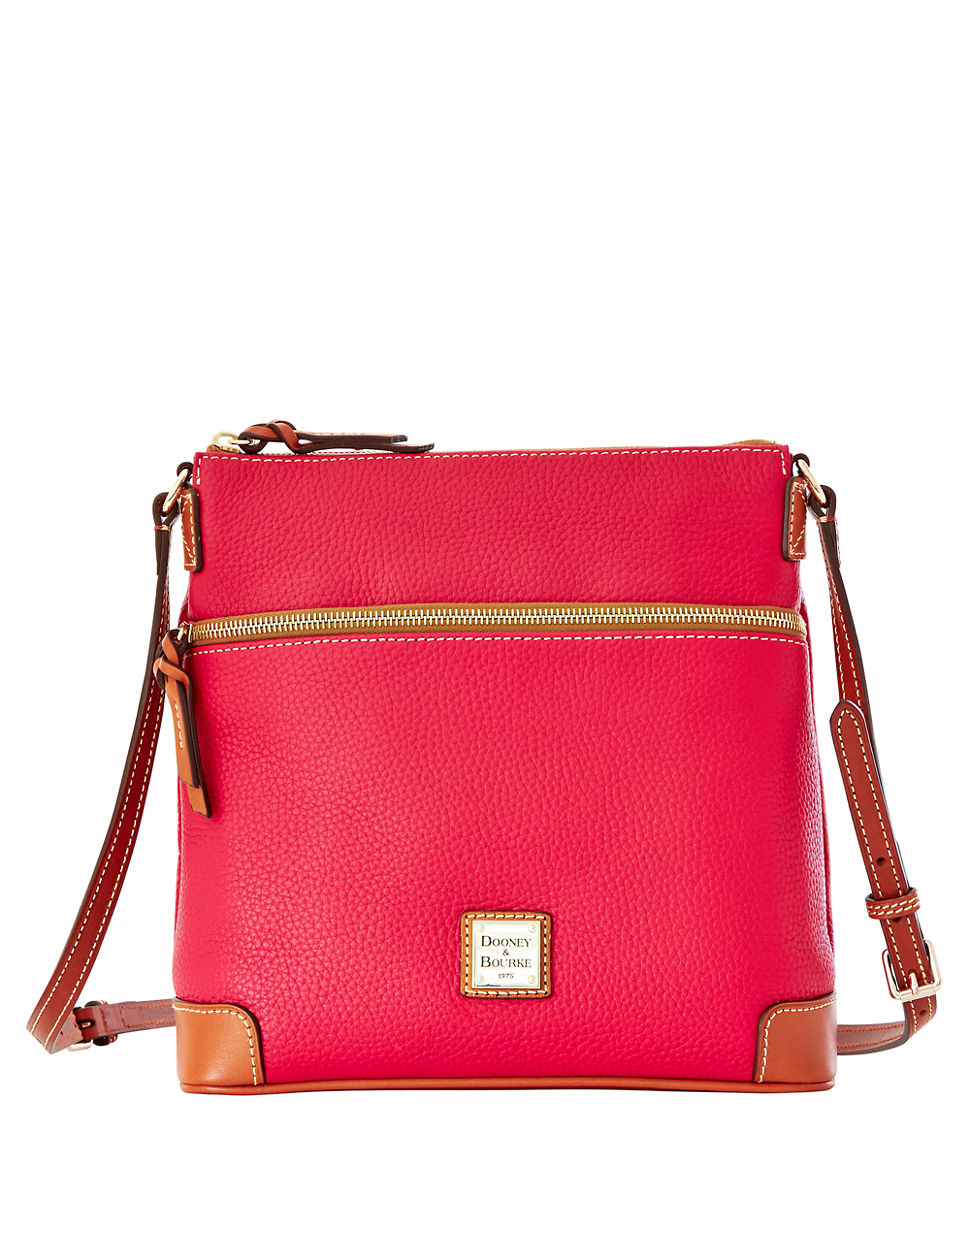 Dooney & bourke Pebbled Leather Crossbody Bag in Pink (MUSTARD) | Lyst